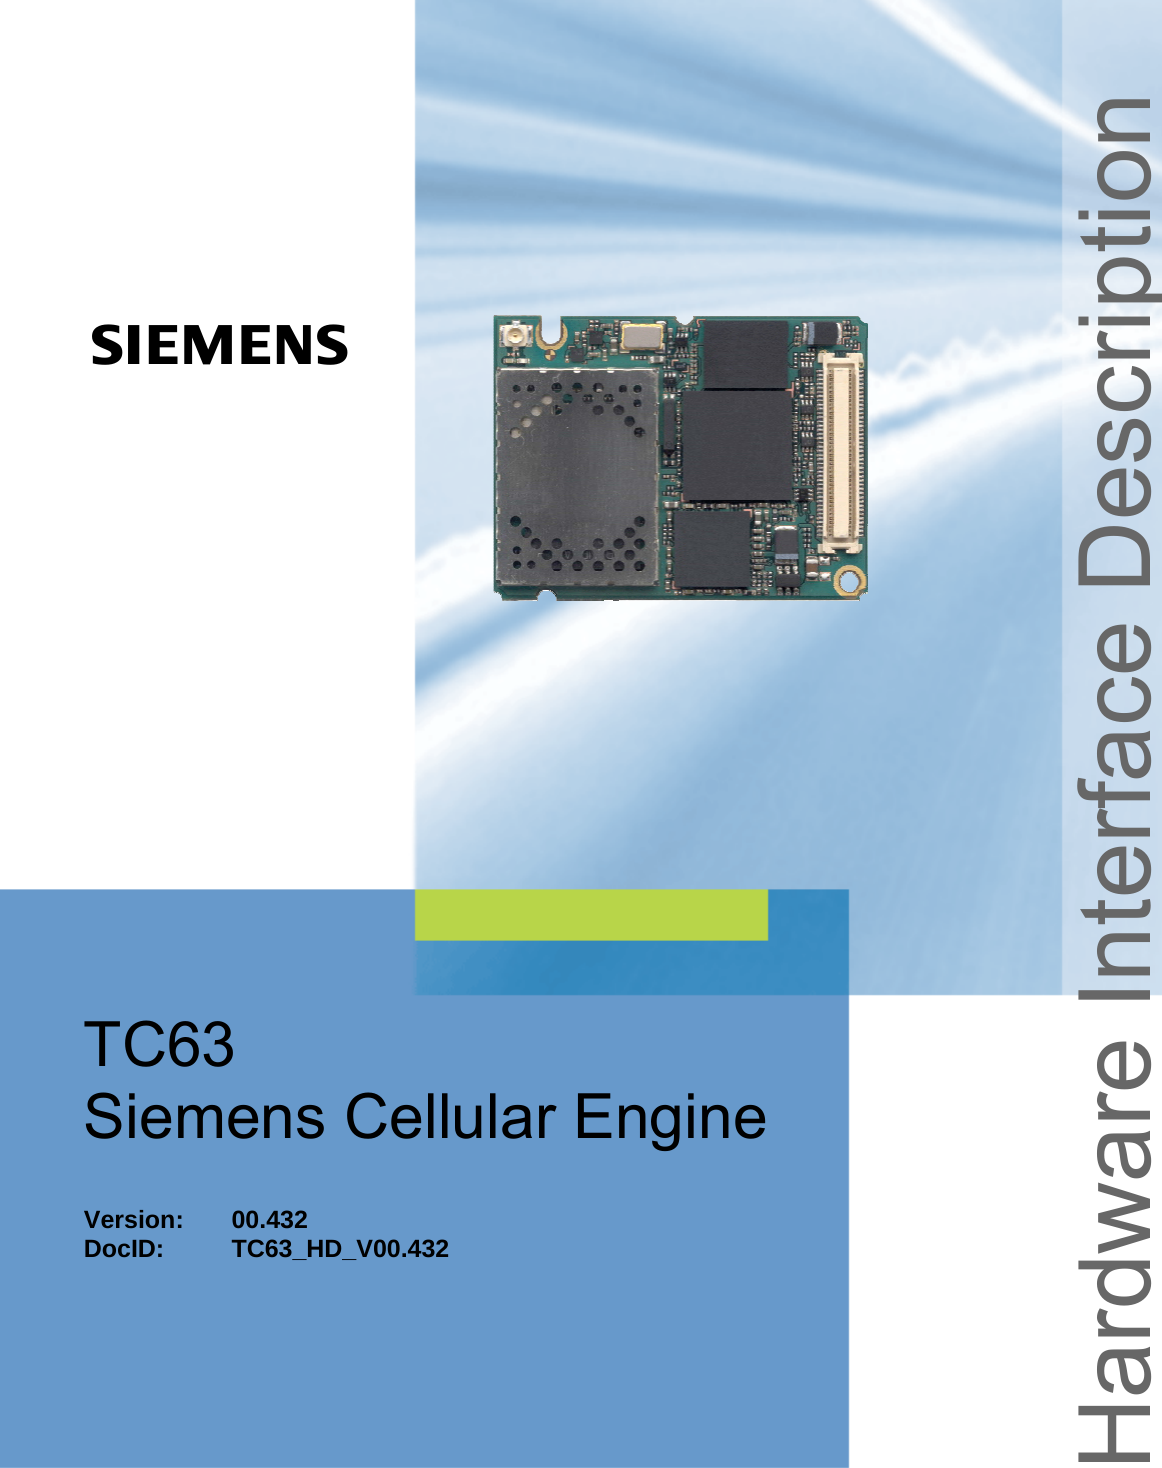   Hardware Interface Description TC63 Siemens Cellular Engine   Version: 00.432 DocID: TC63_HD_V00.432 s 